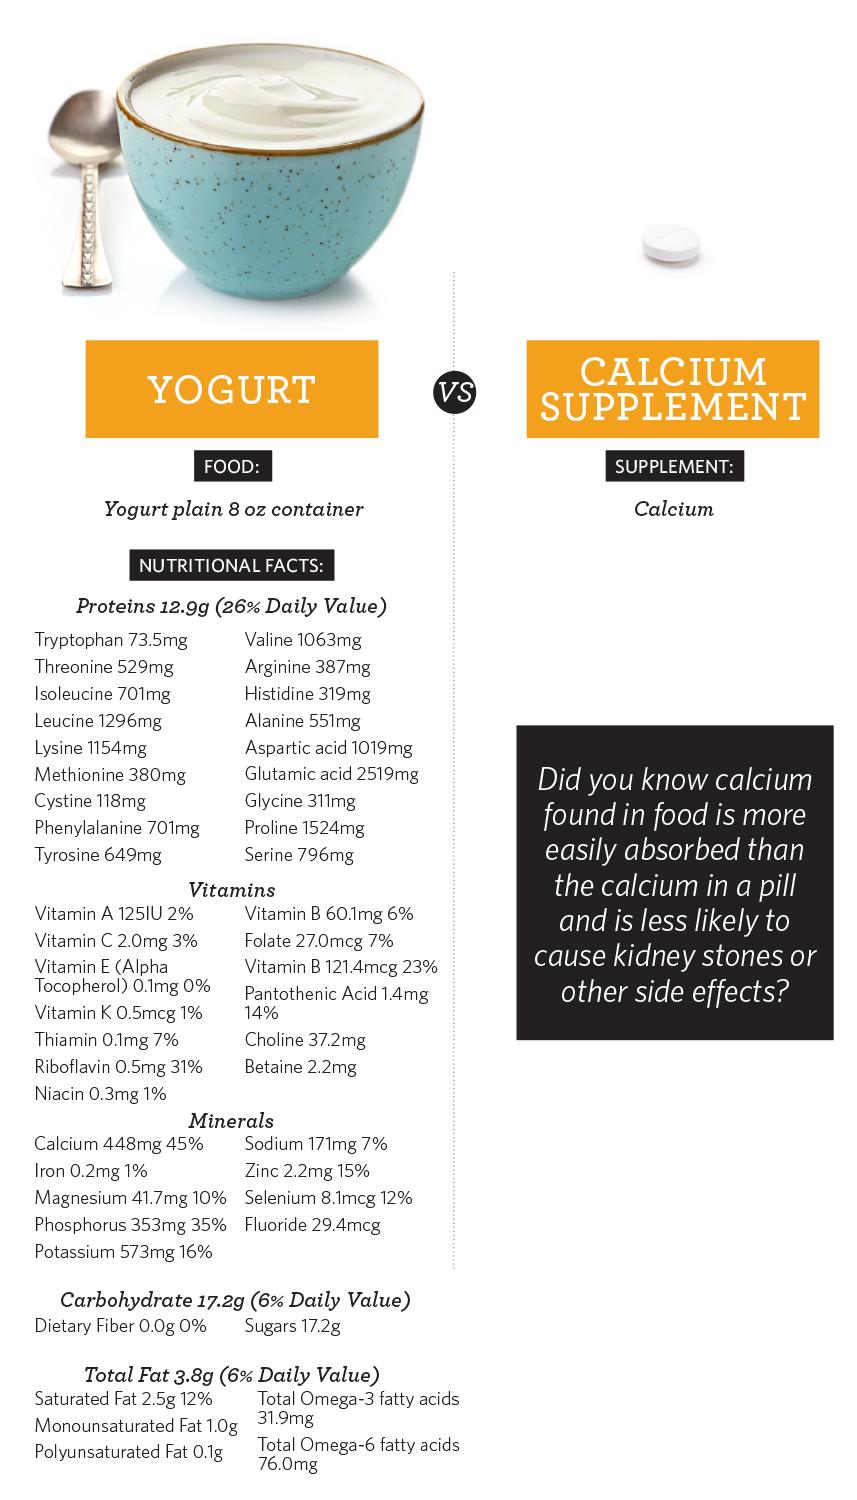 Chart representing the nutritional benefits of yogurt versus a calcium supplement.